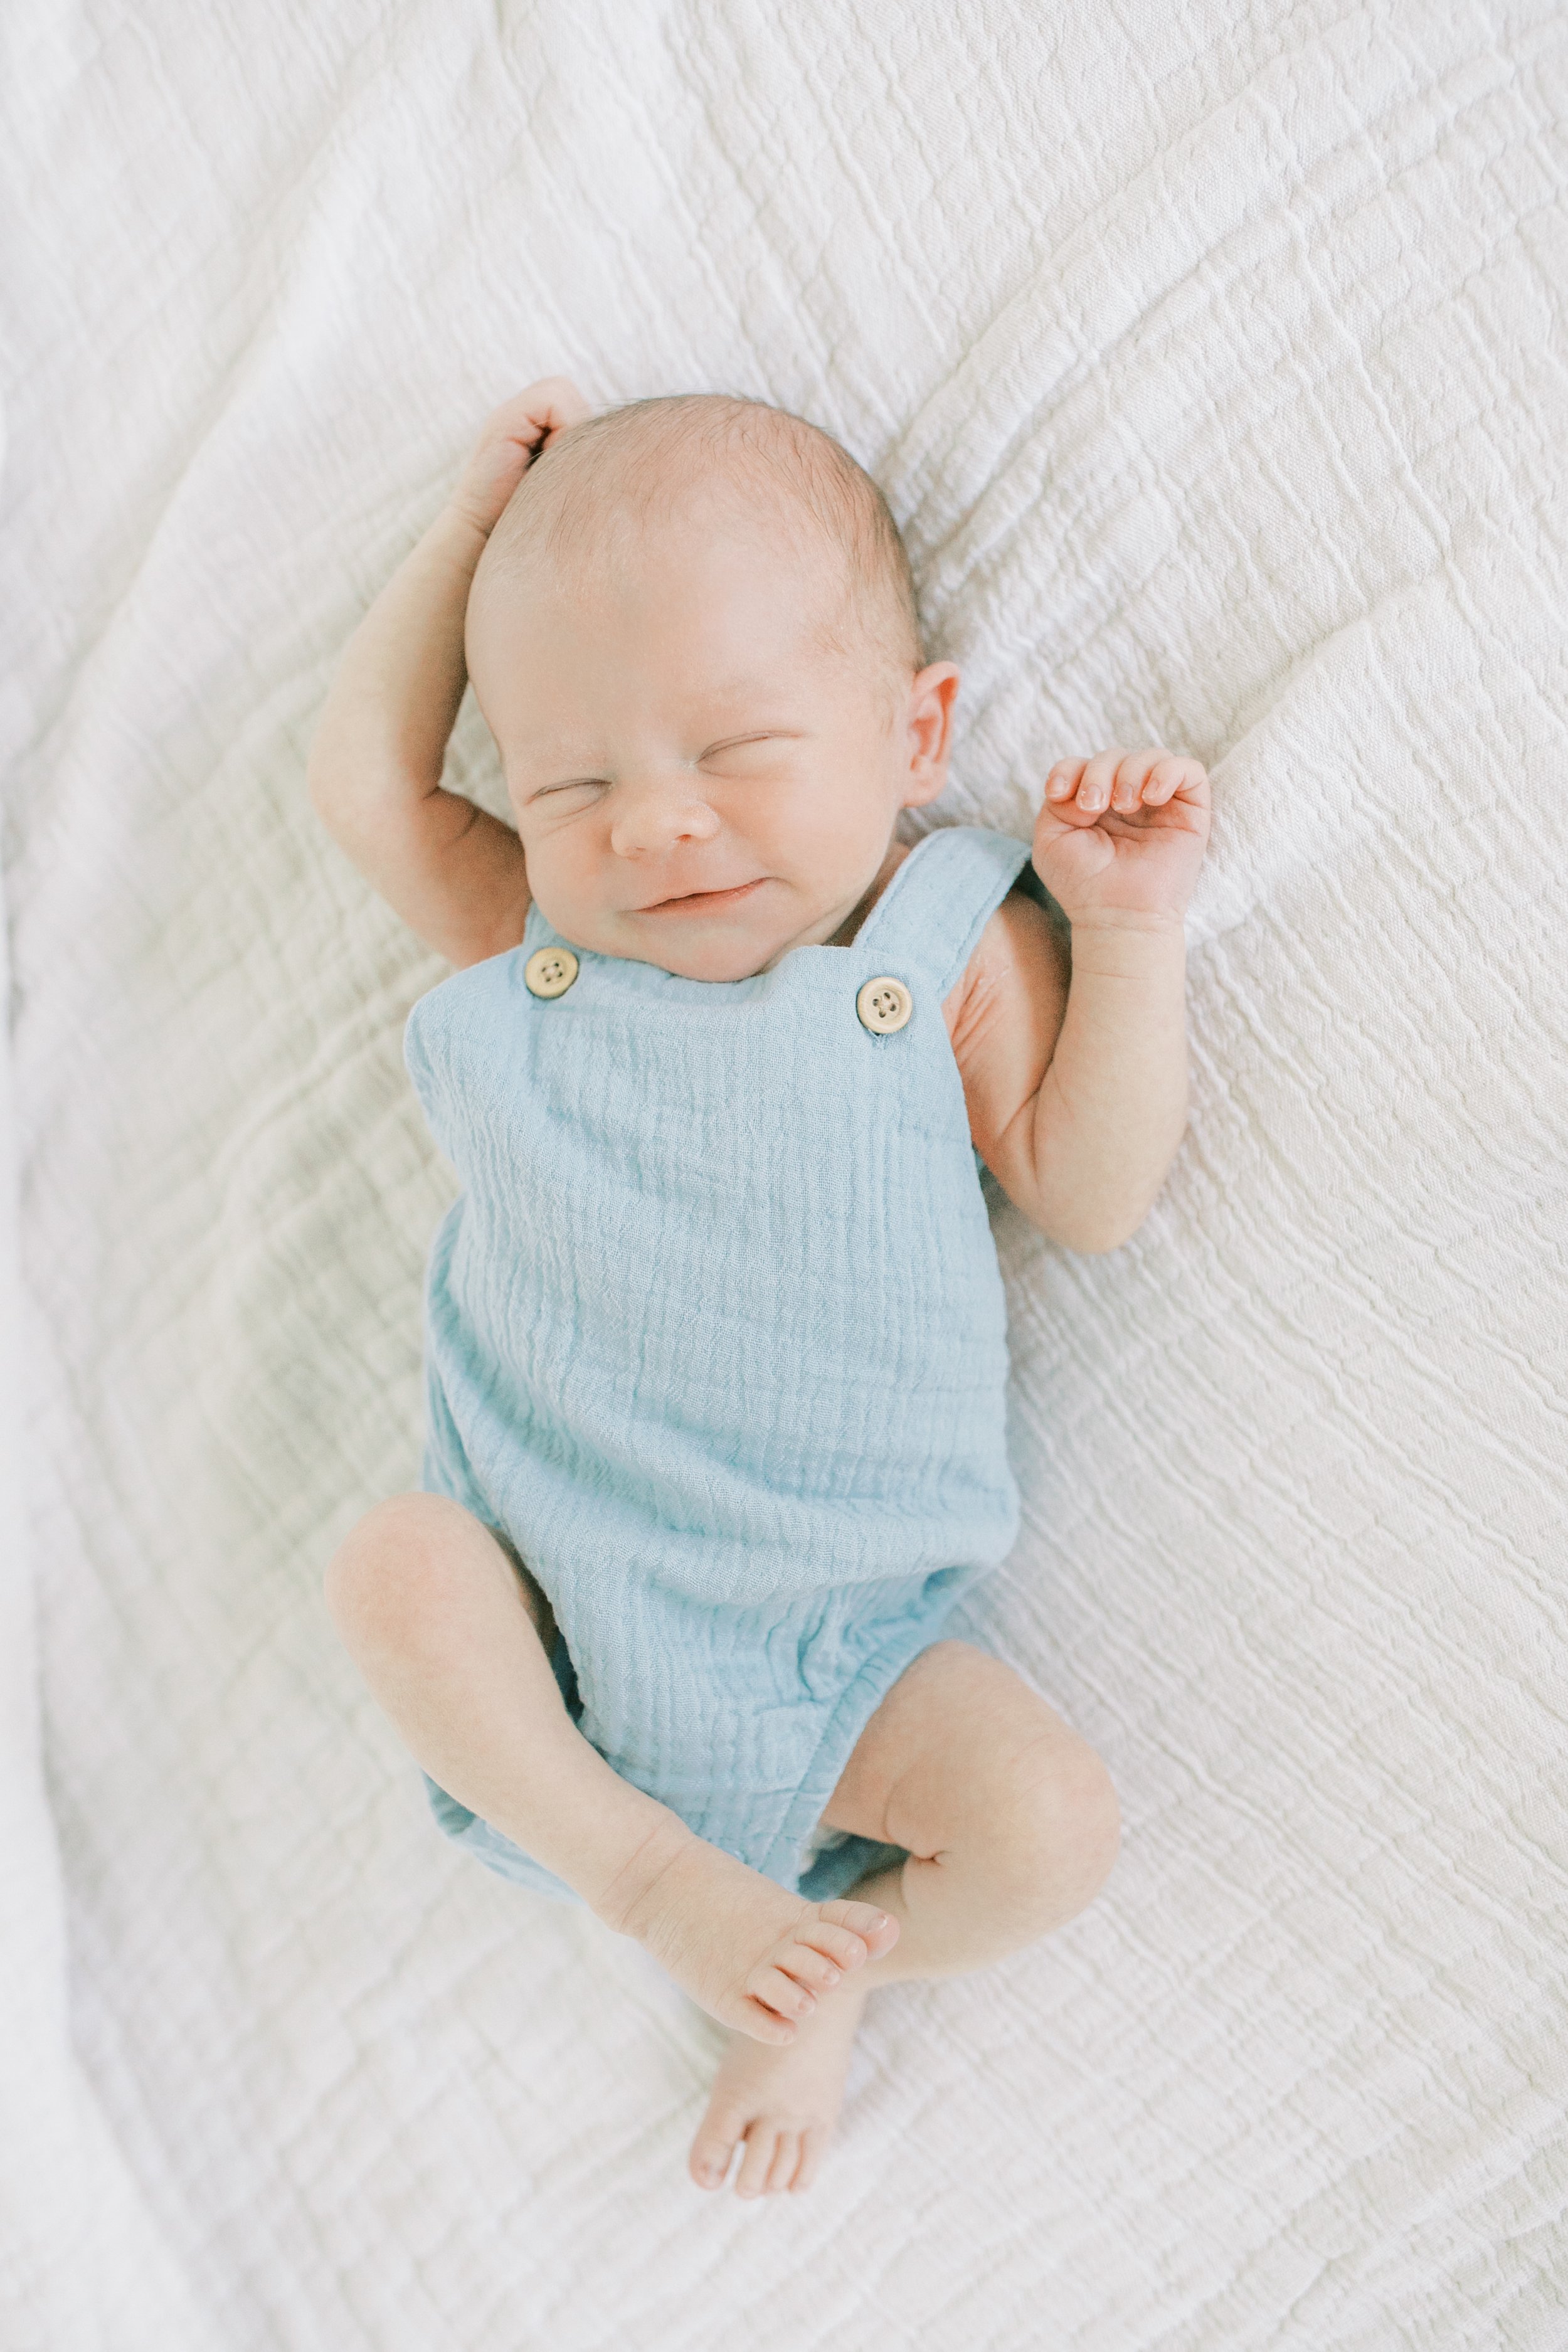 Baby Finn — VANESSA WYLER - Pewaukee Family Newborn Photographer